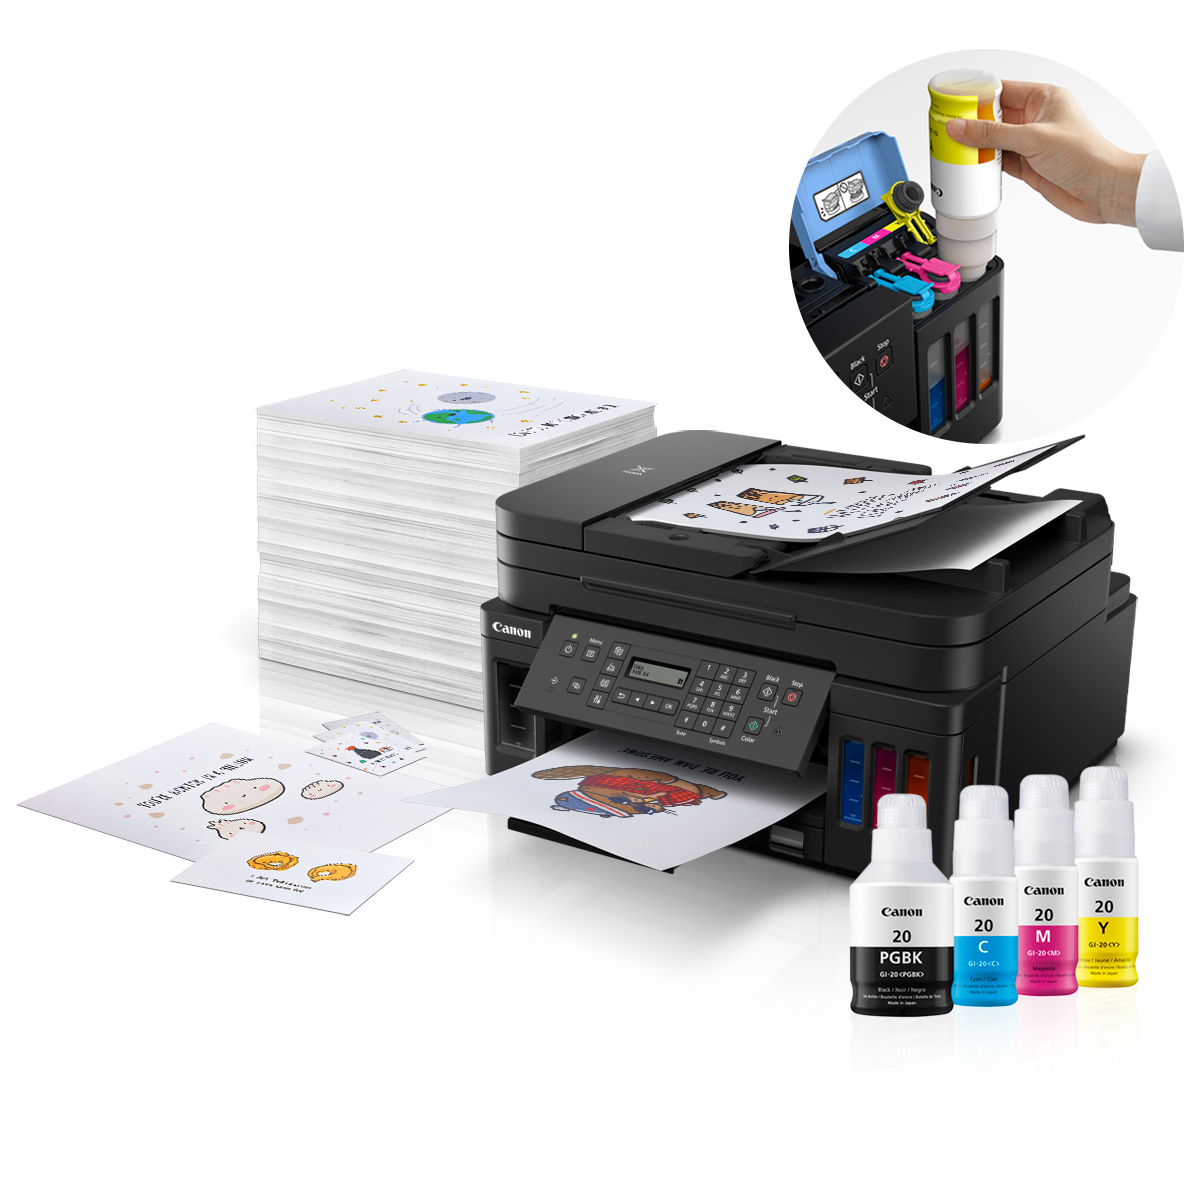 MegaTank: Choosing the right printer for your side hustle